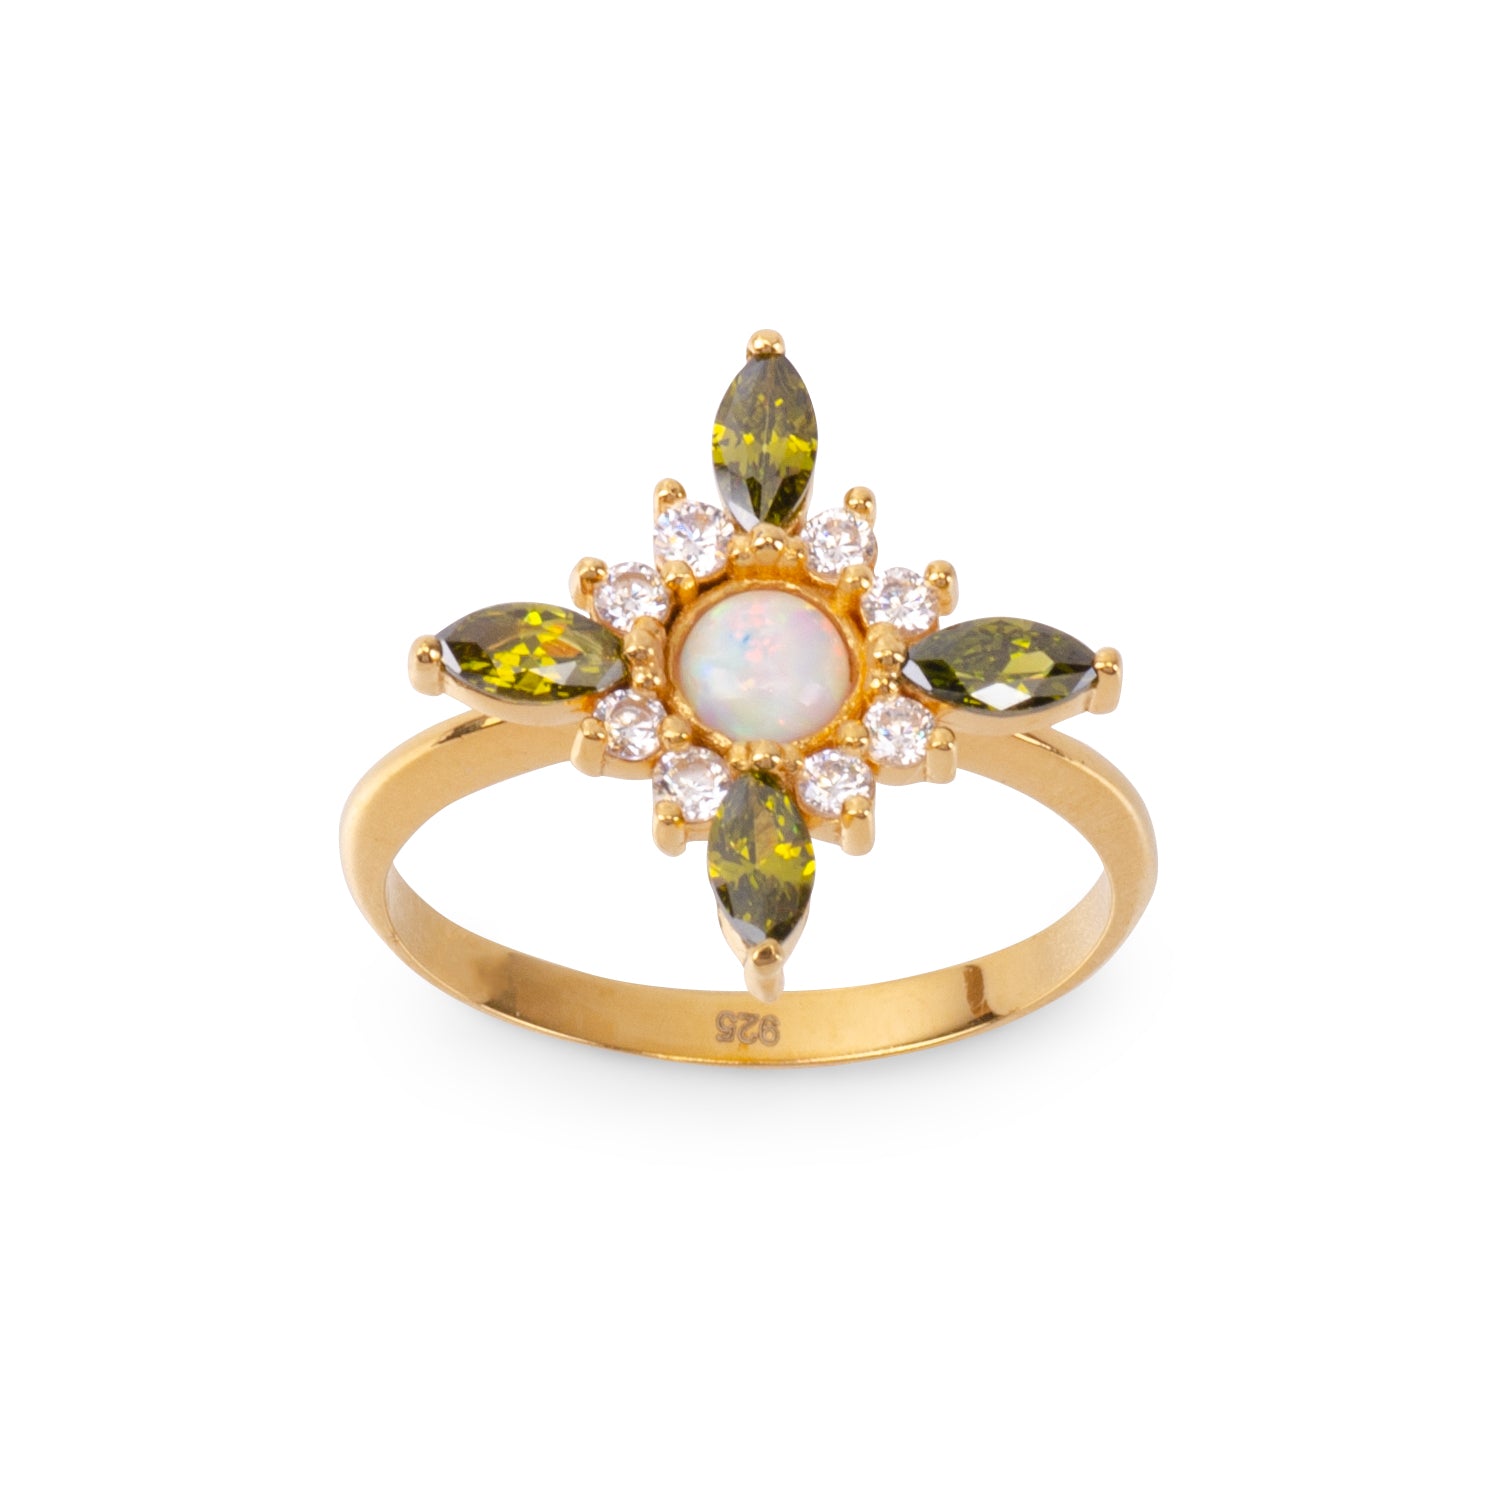 Flora Green Quartz 24K Gold Ring - Gold Vermeil Ring - Pretland | Spiritual Crystals & Jewelry